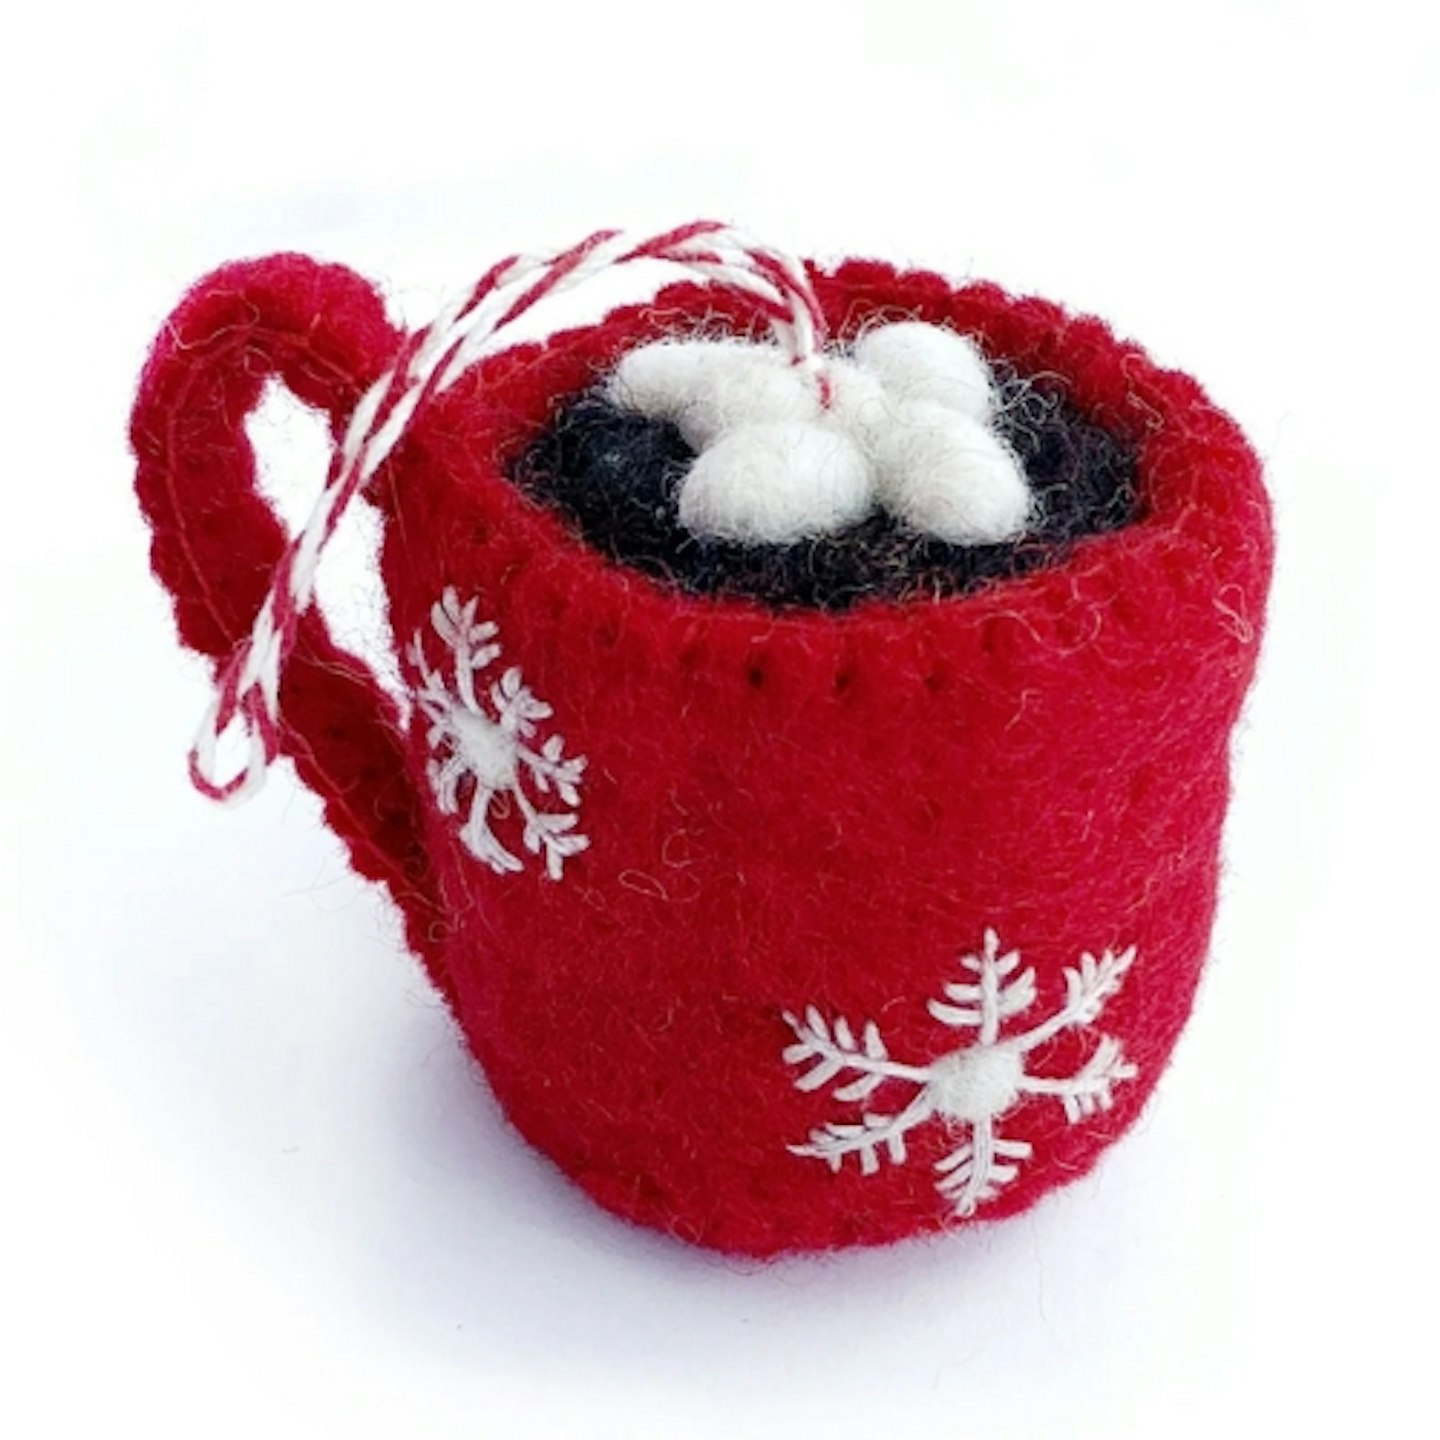 Hot Chocolate Ornament - Felt Wool Fair Trade